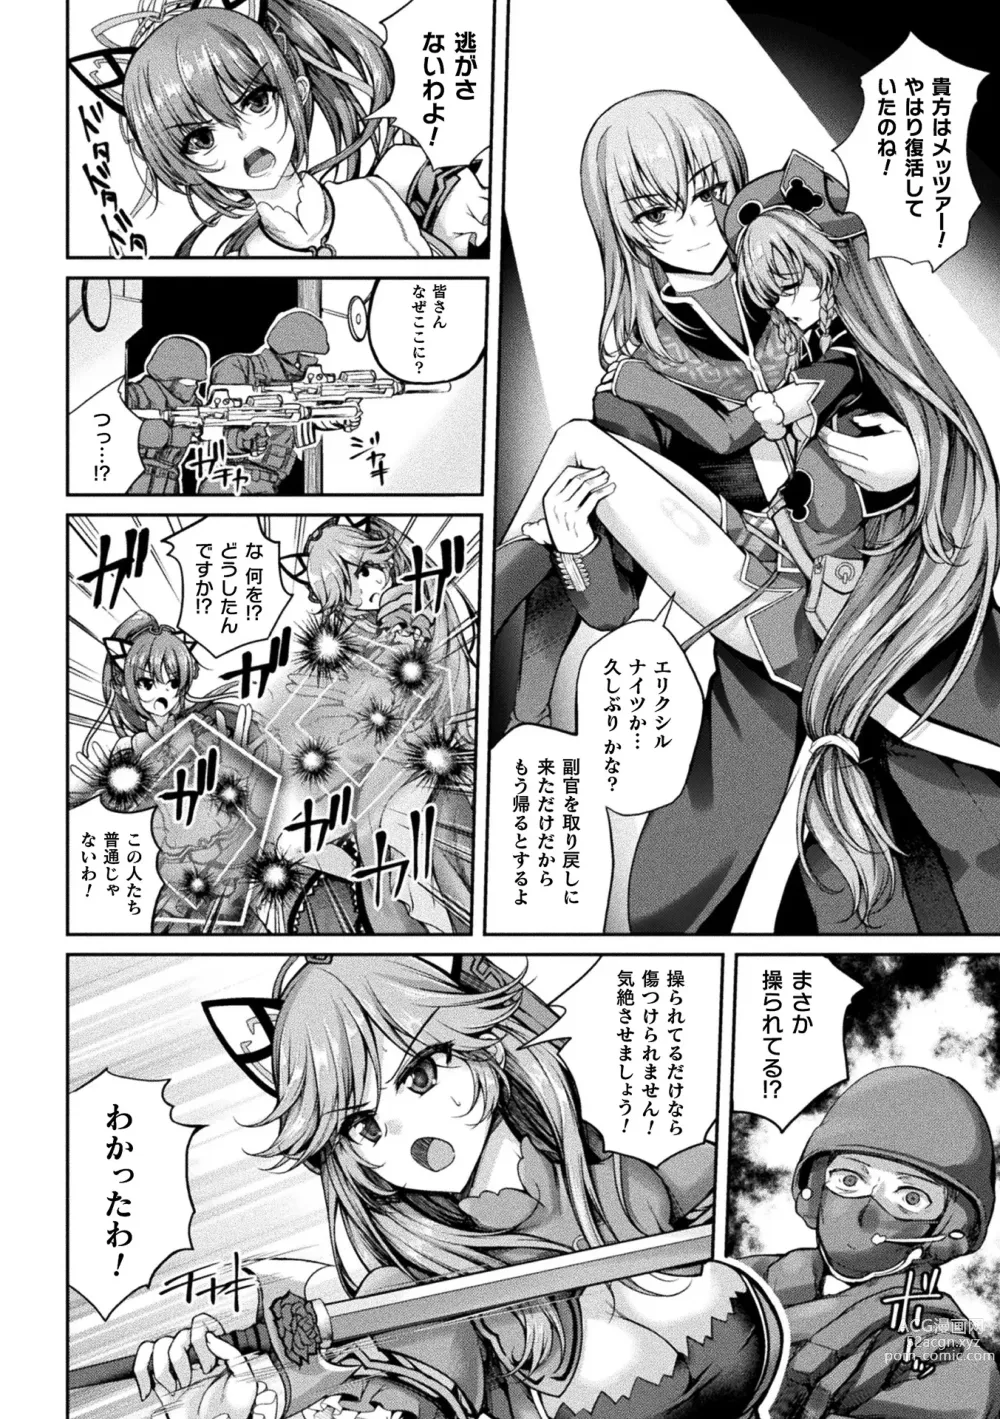 Page 14 of manga Kukkoro Heroines Vol. 33